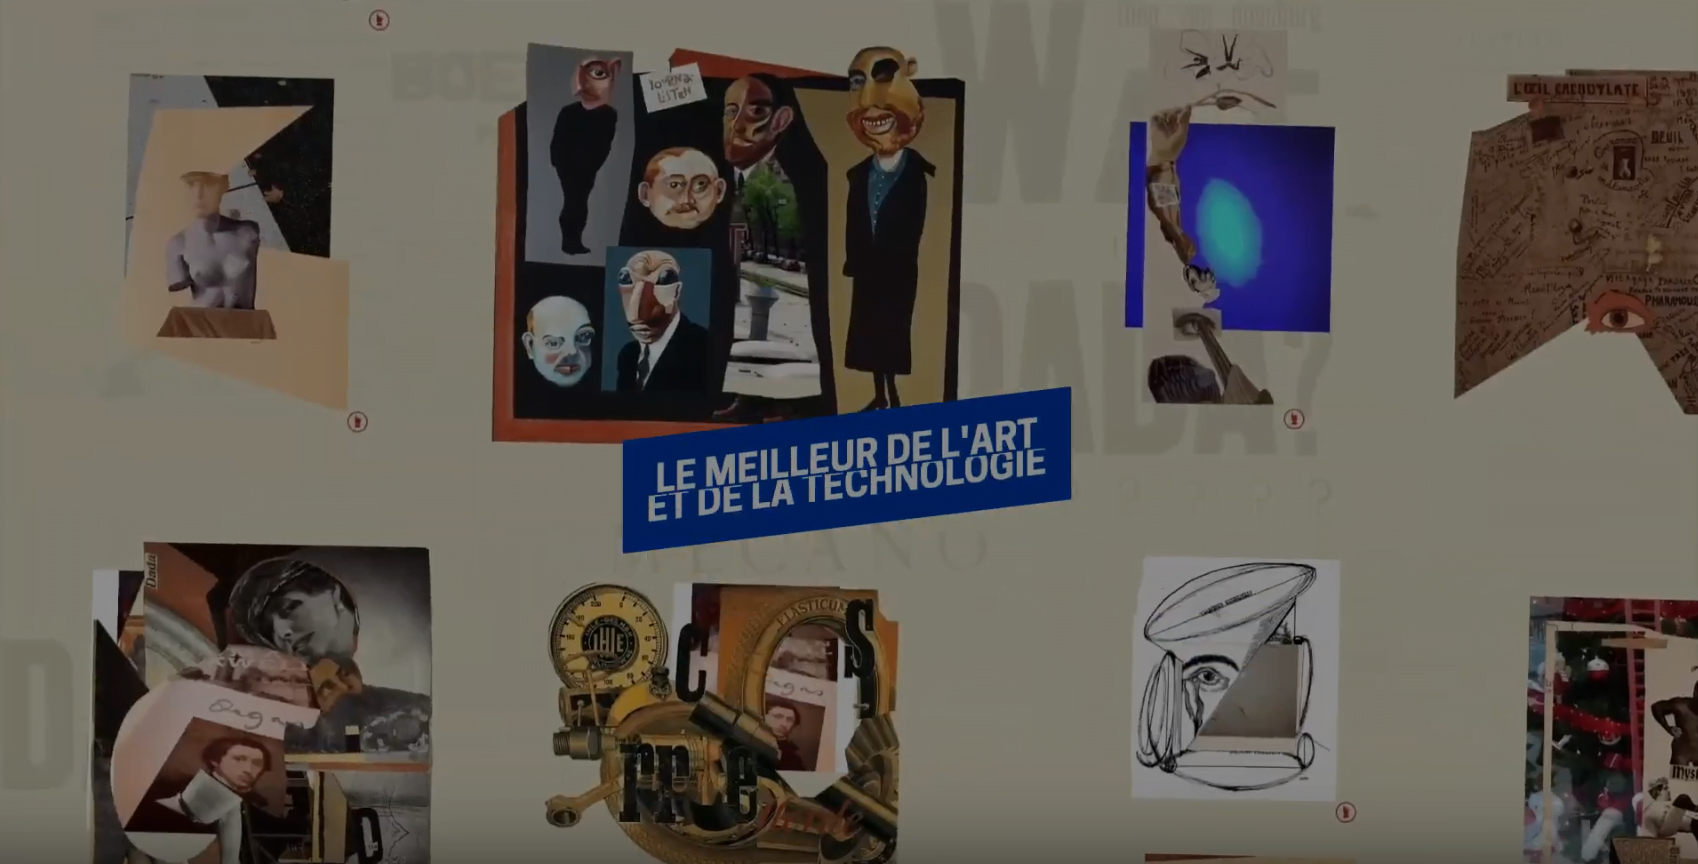 A trailer that celebrates Quebec’s digital creativity